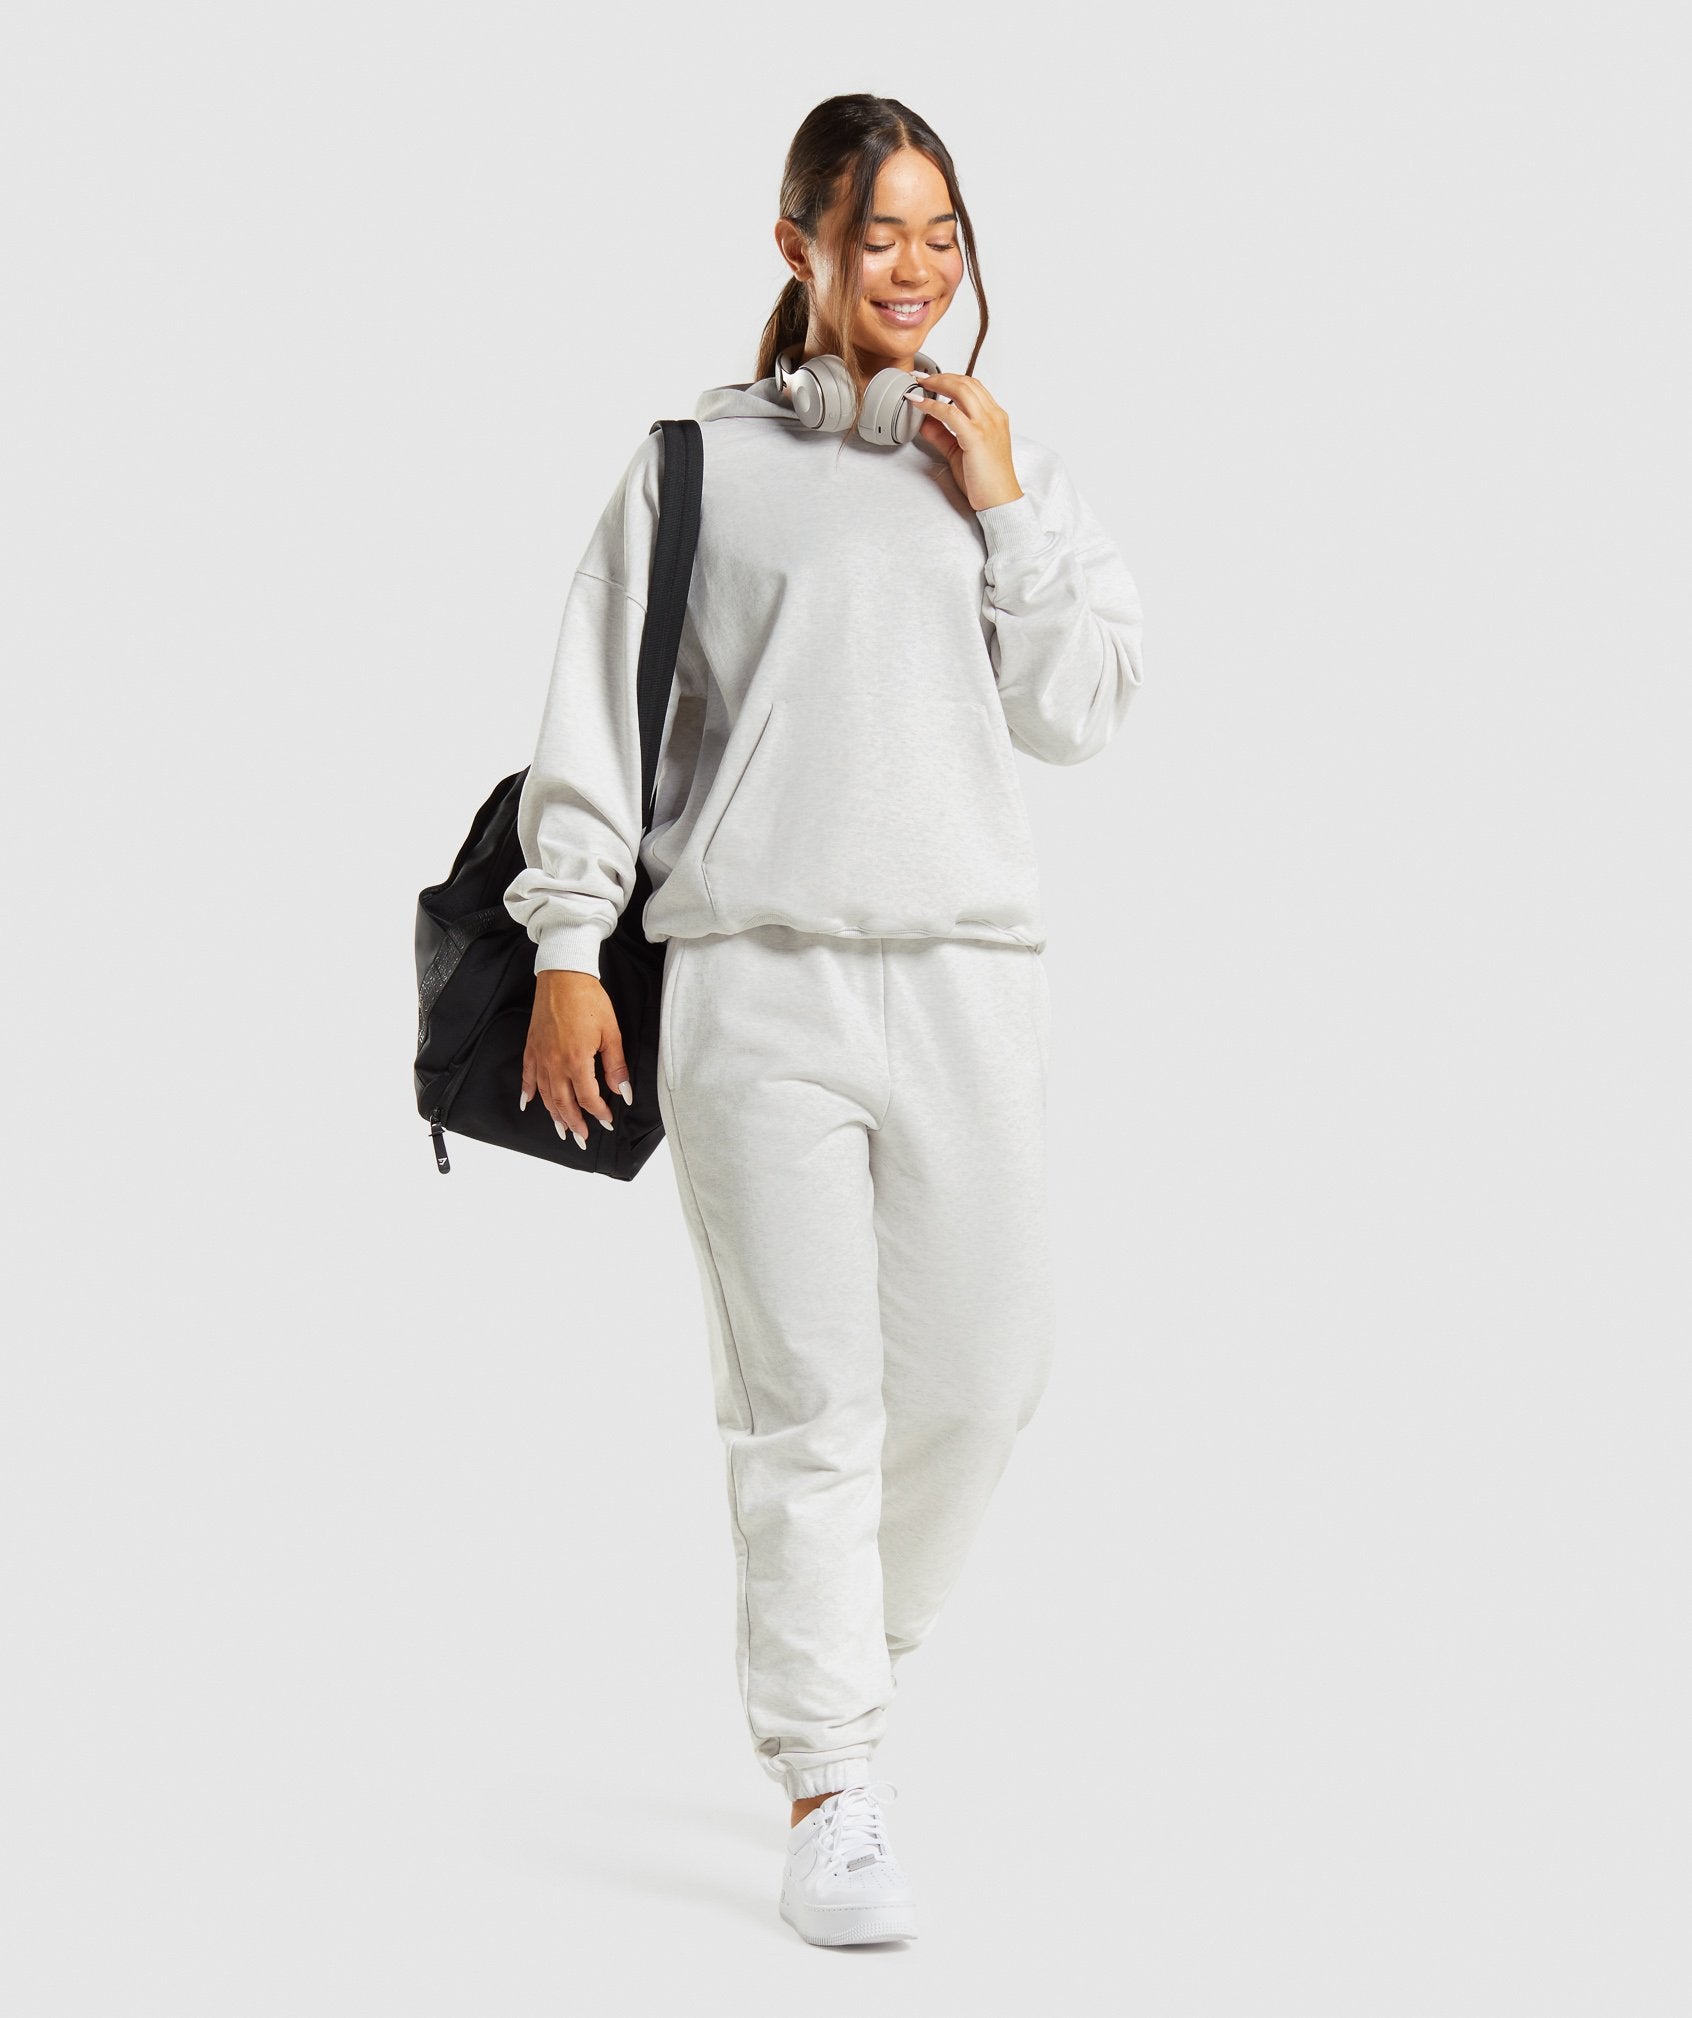 GYMSHARK Hoodie Slounge Loungewear in Charcoal Marl - XS